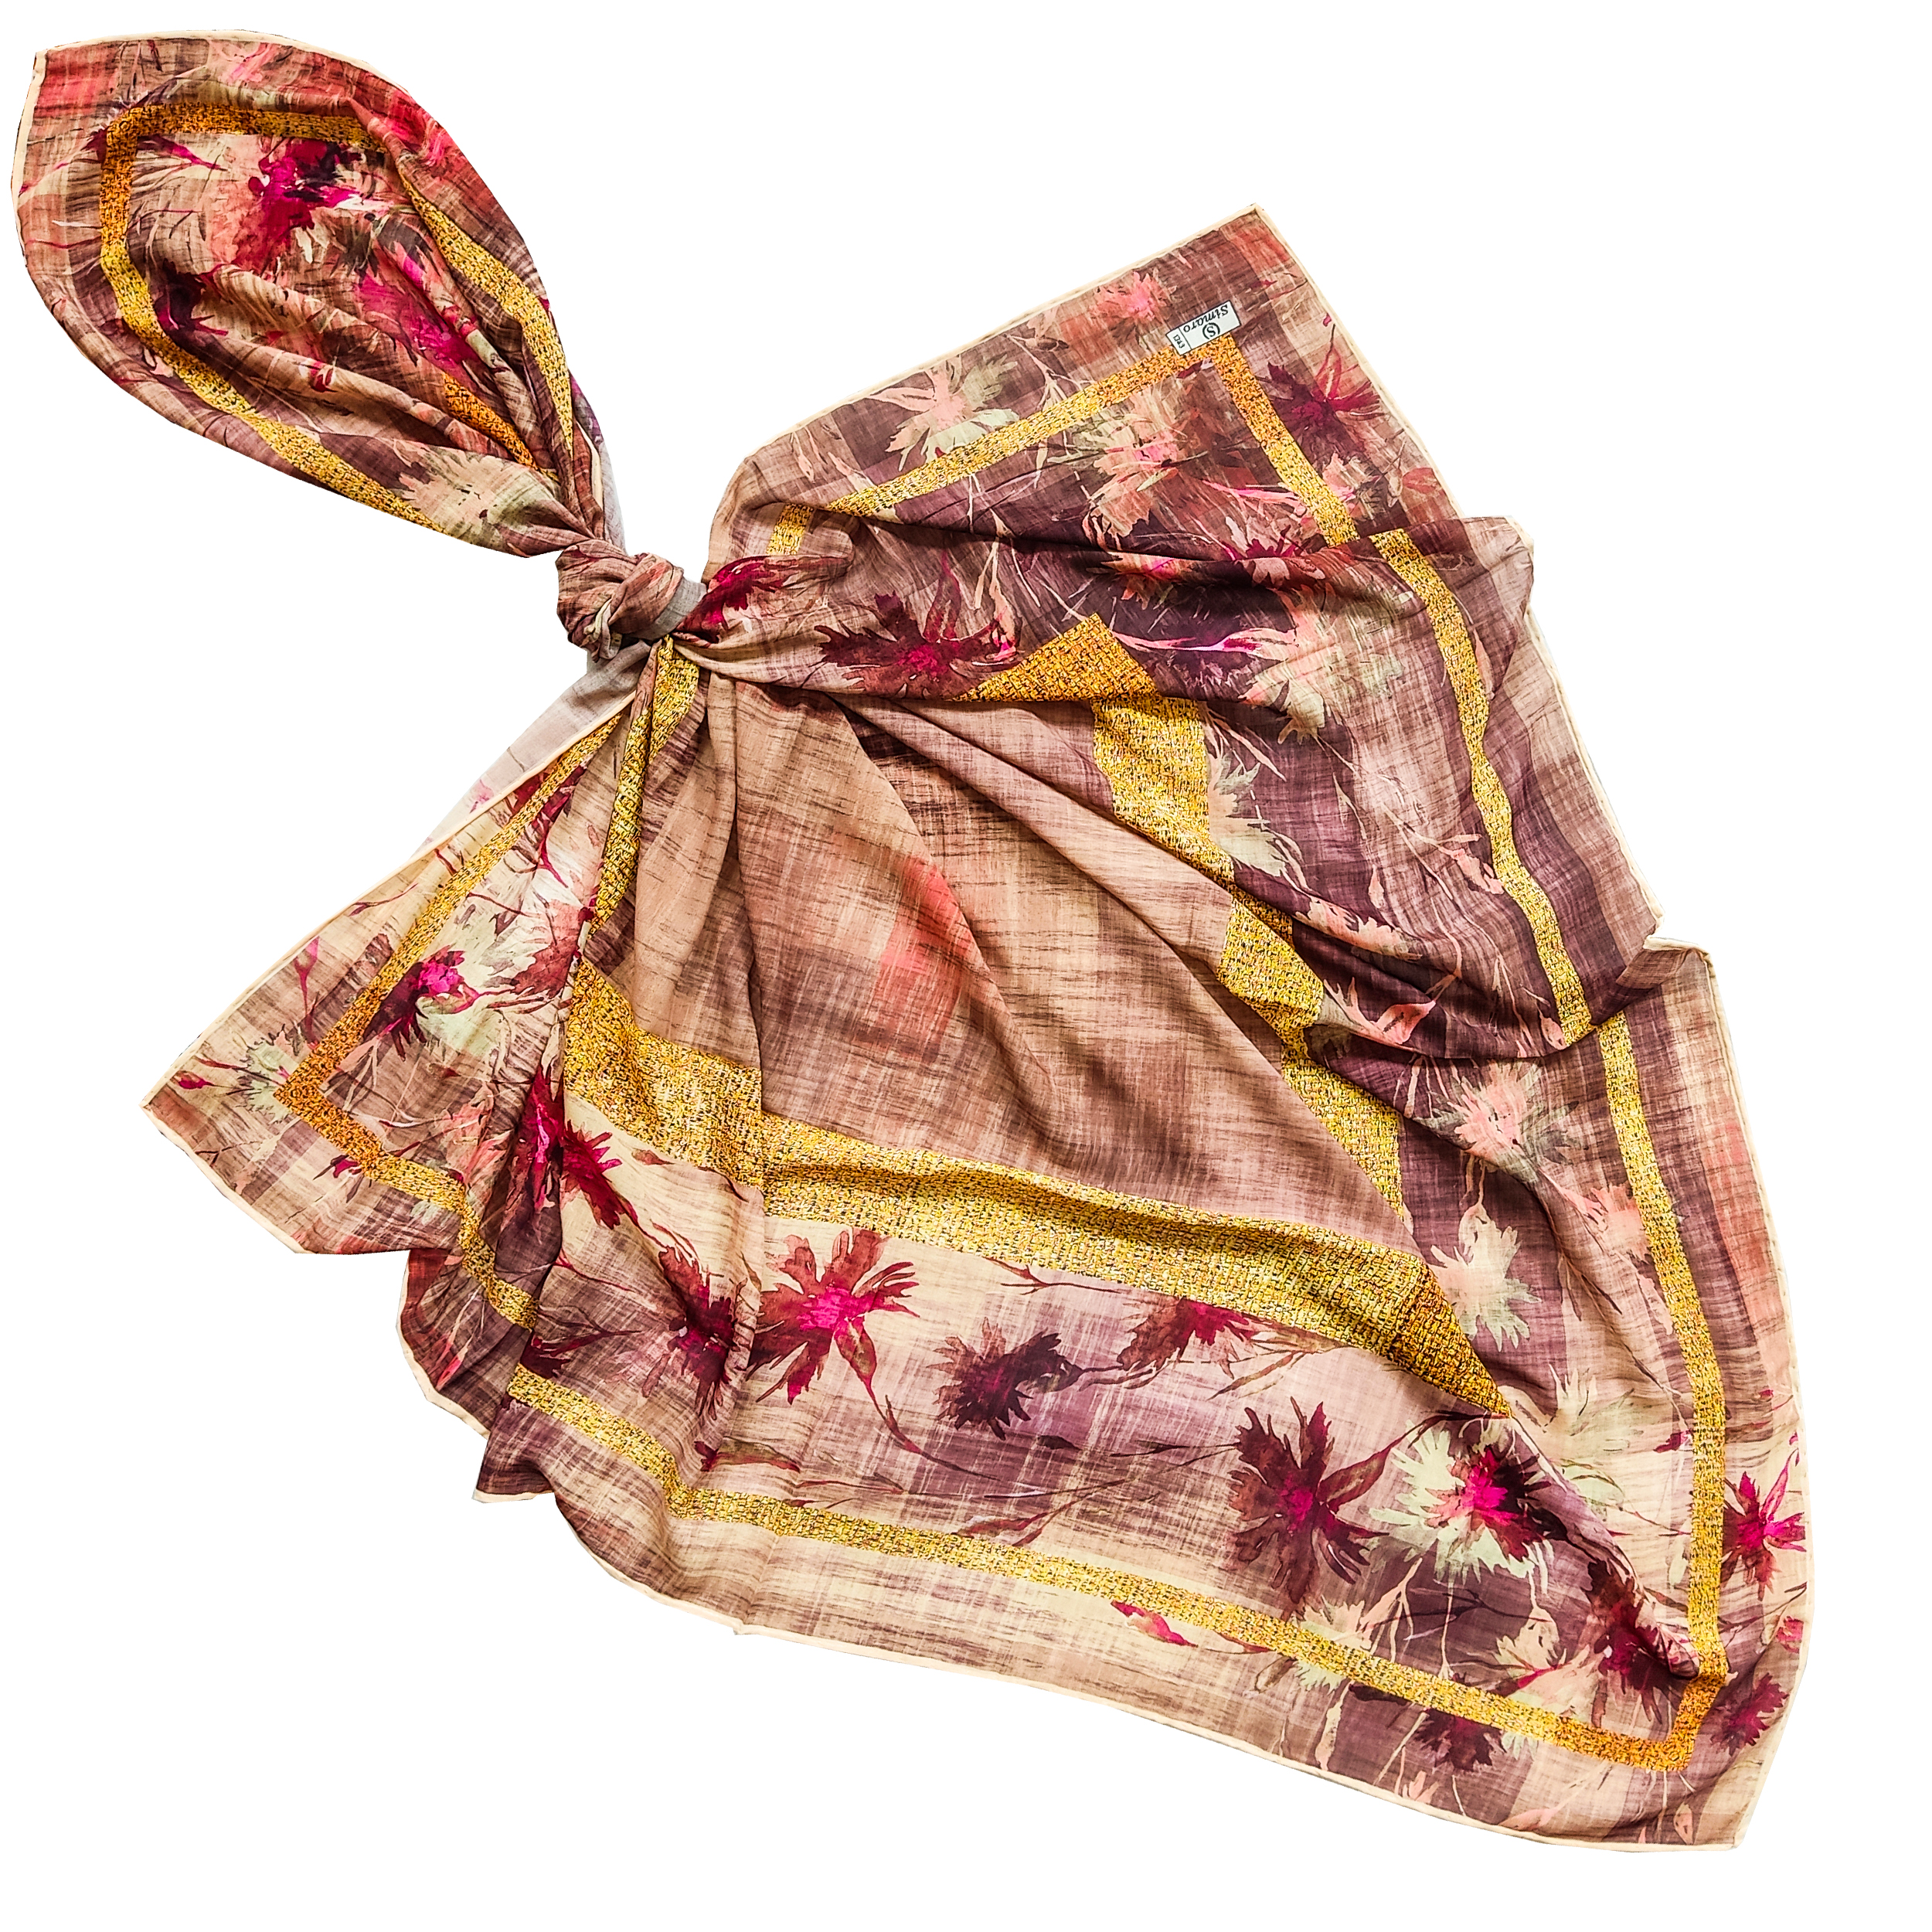 روسری زنانه مدل حریر ابریشم مجلسی کد 1161